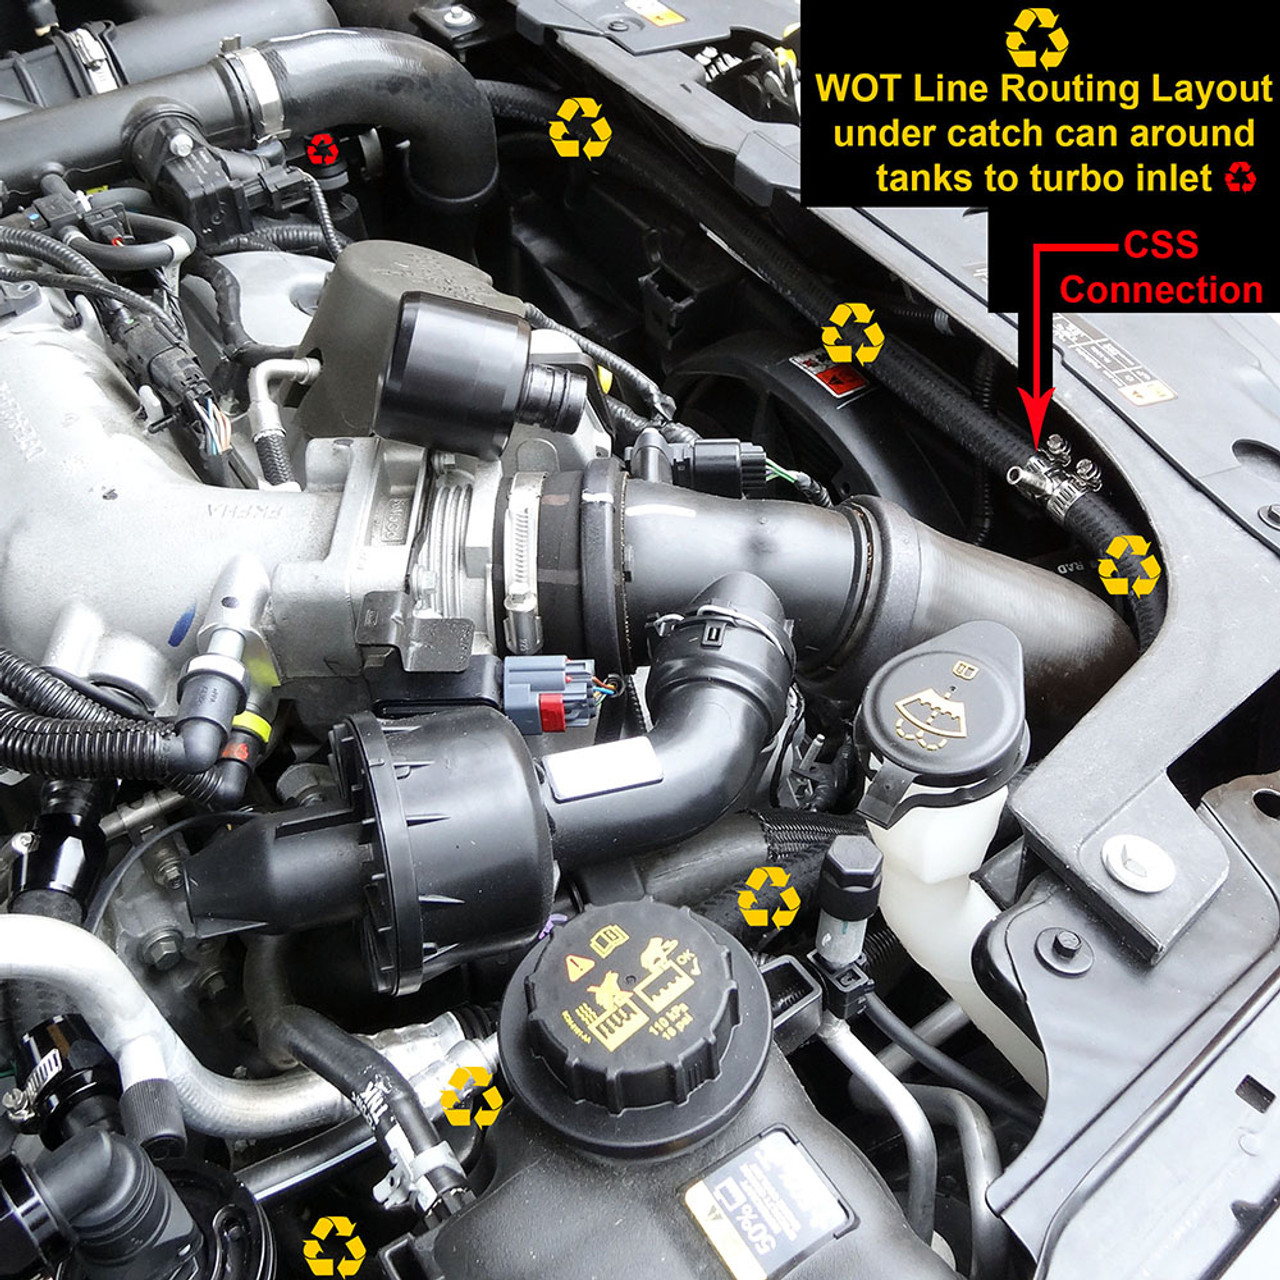 14-18 GM Chevrolet GMC Truck 5.3L 6.2L Oil Catch Can Separator Plug N Play ™